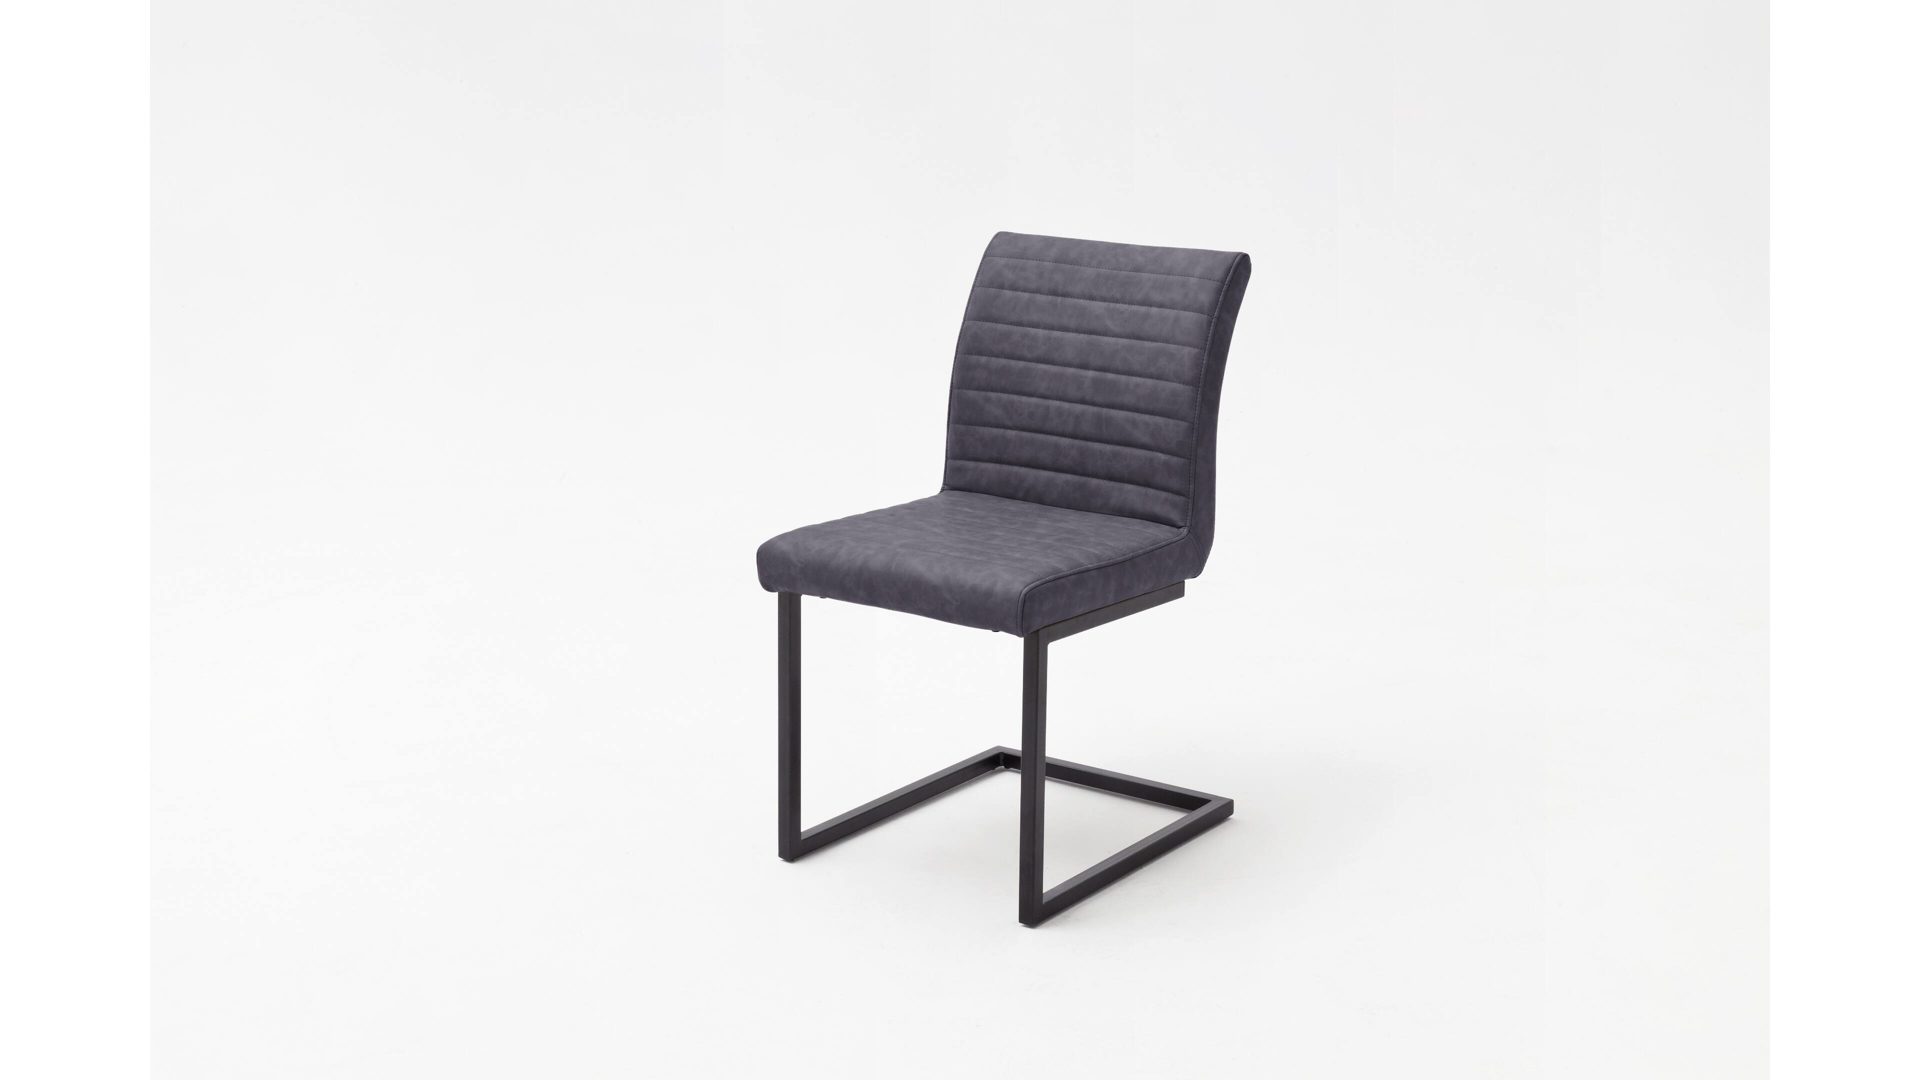 Schwingstuhl Mca furniture aus Stoff in Grau Schwingstuhl graues Kunstleder GX & schwarzes Metallgestell